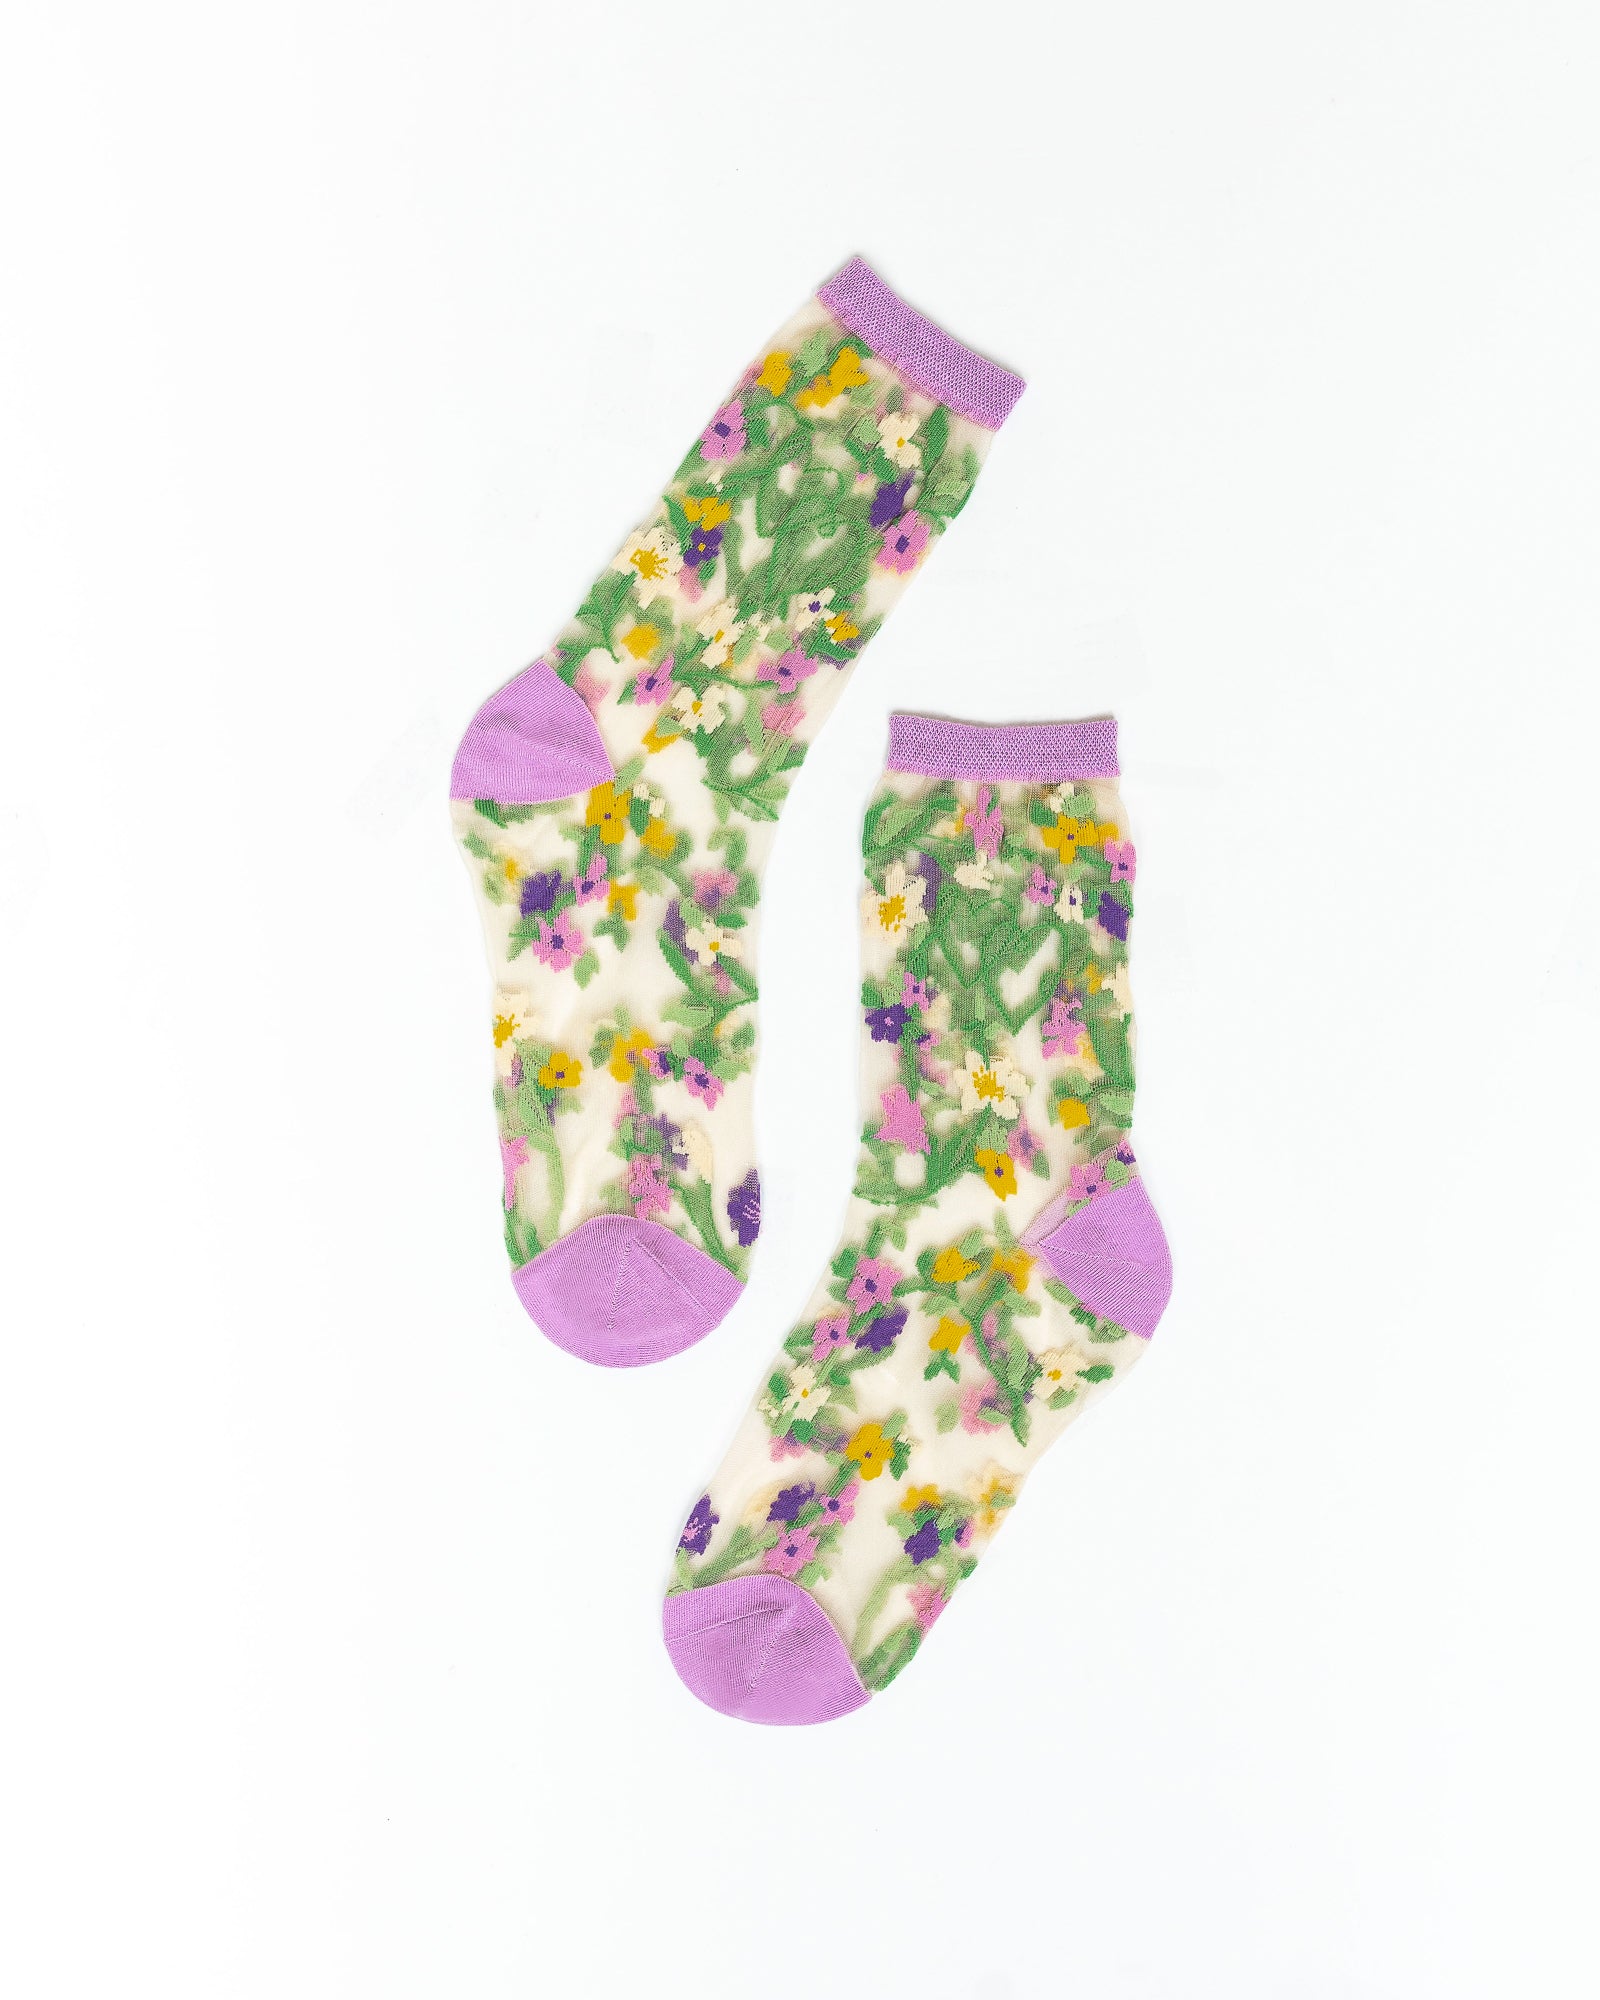 Taylor Swiss Socks, Funny Socks, Swiftie Merch, Foodie Gift